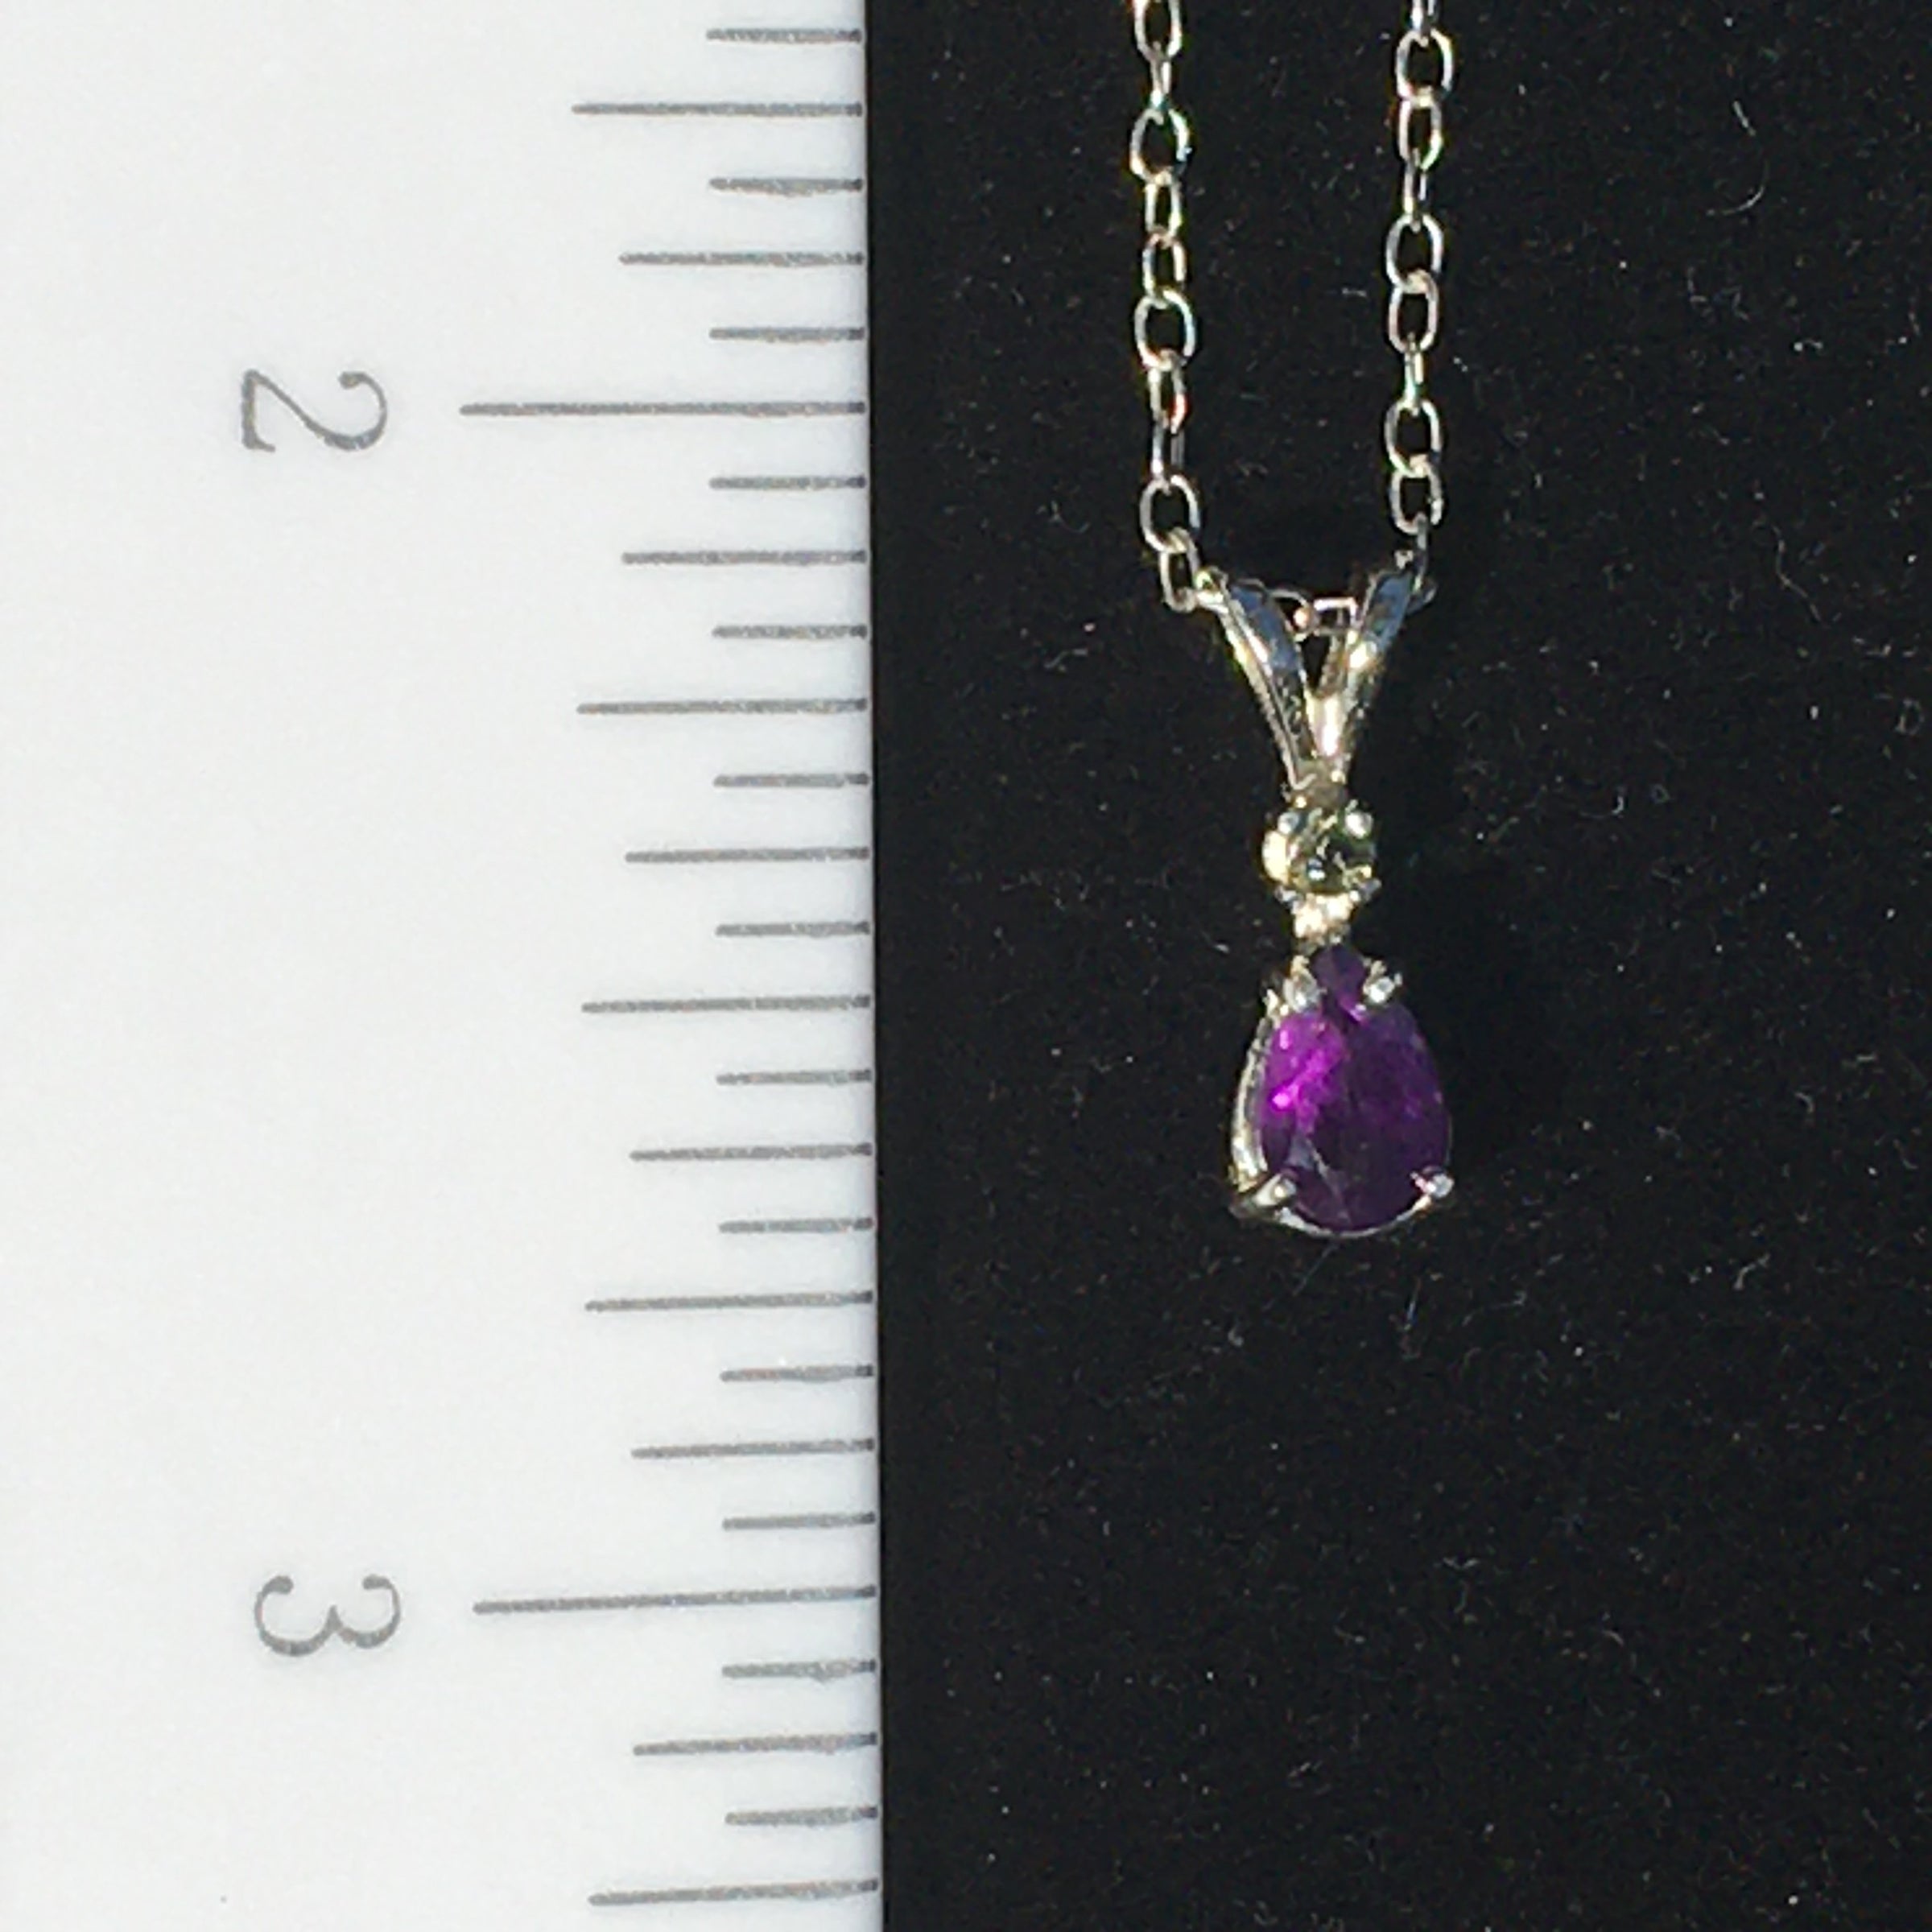 Silver Moldavite Amethyst Crystal Pendant Necklace-Moldavite Life